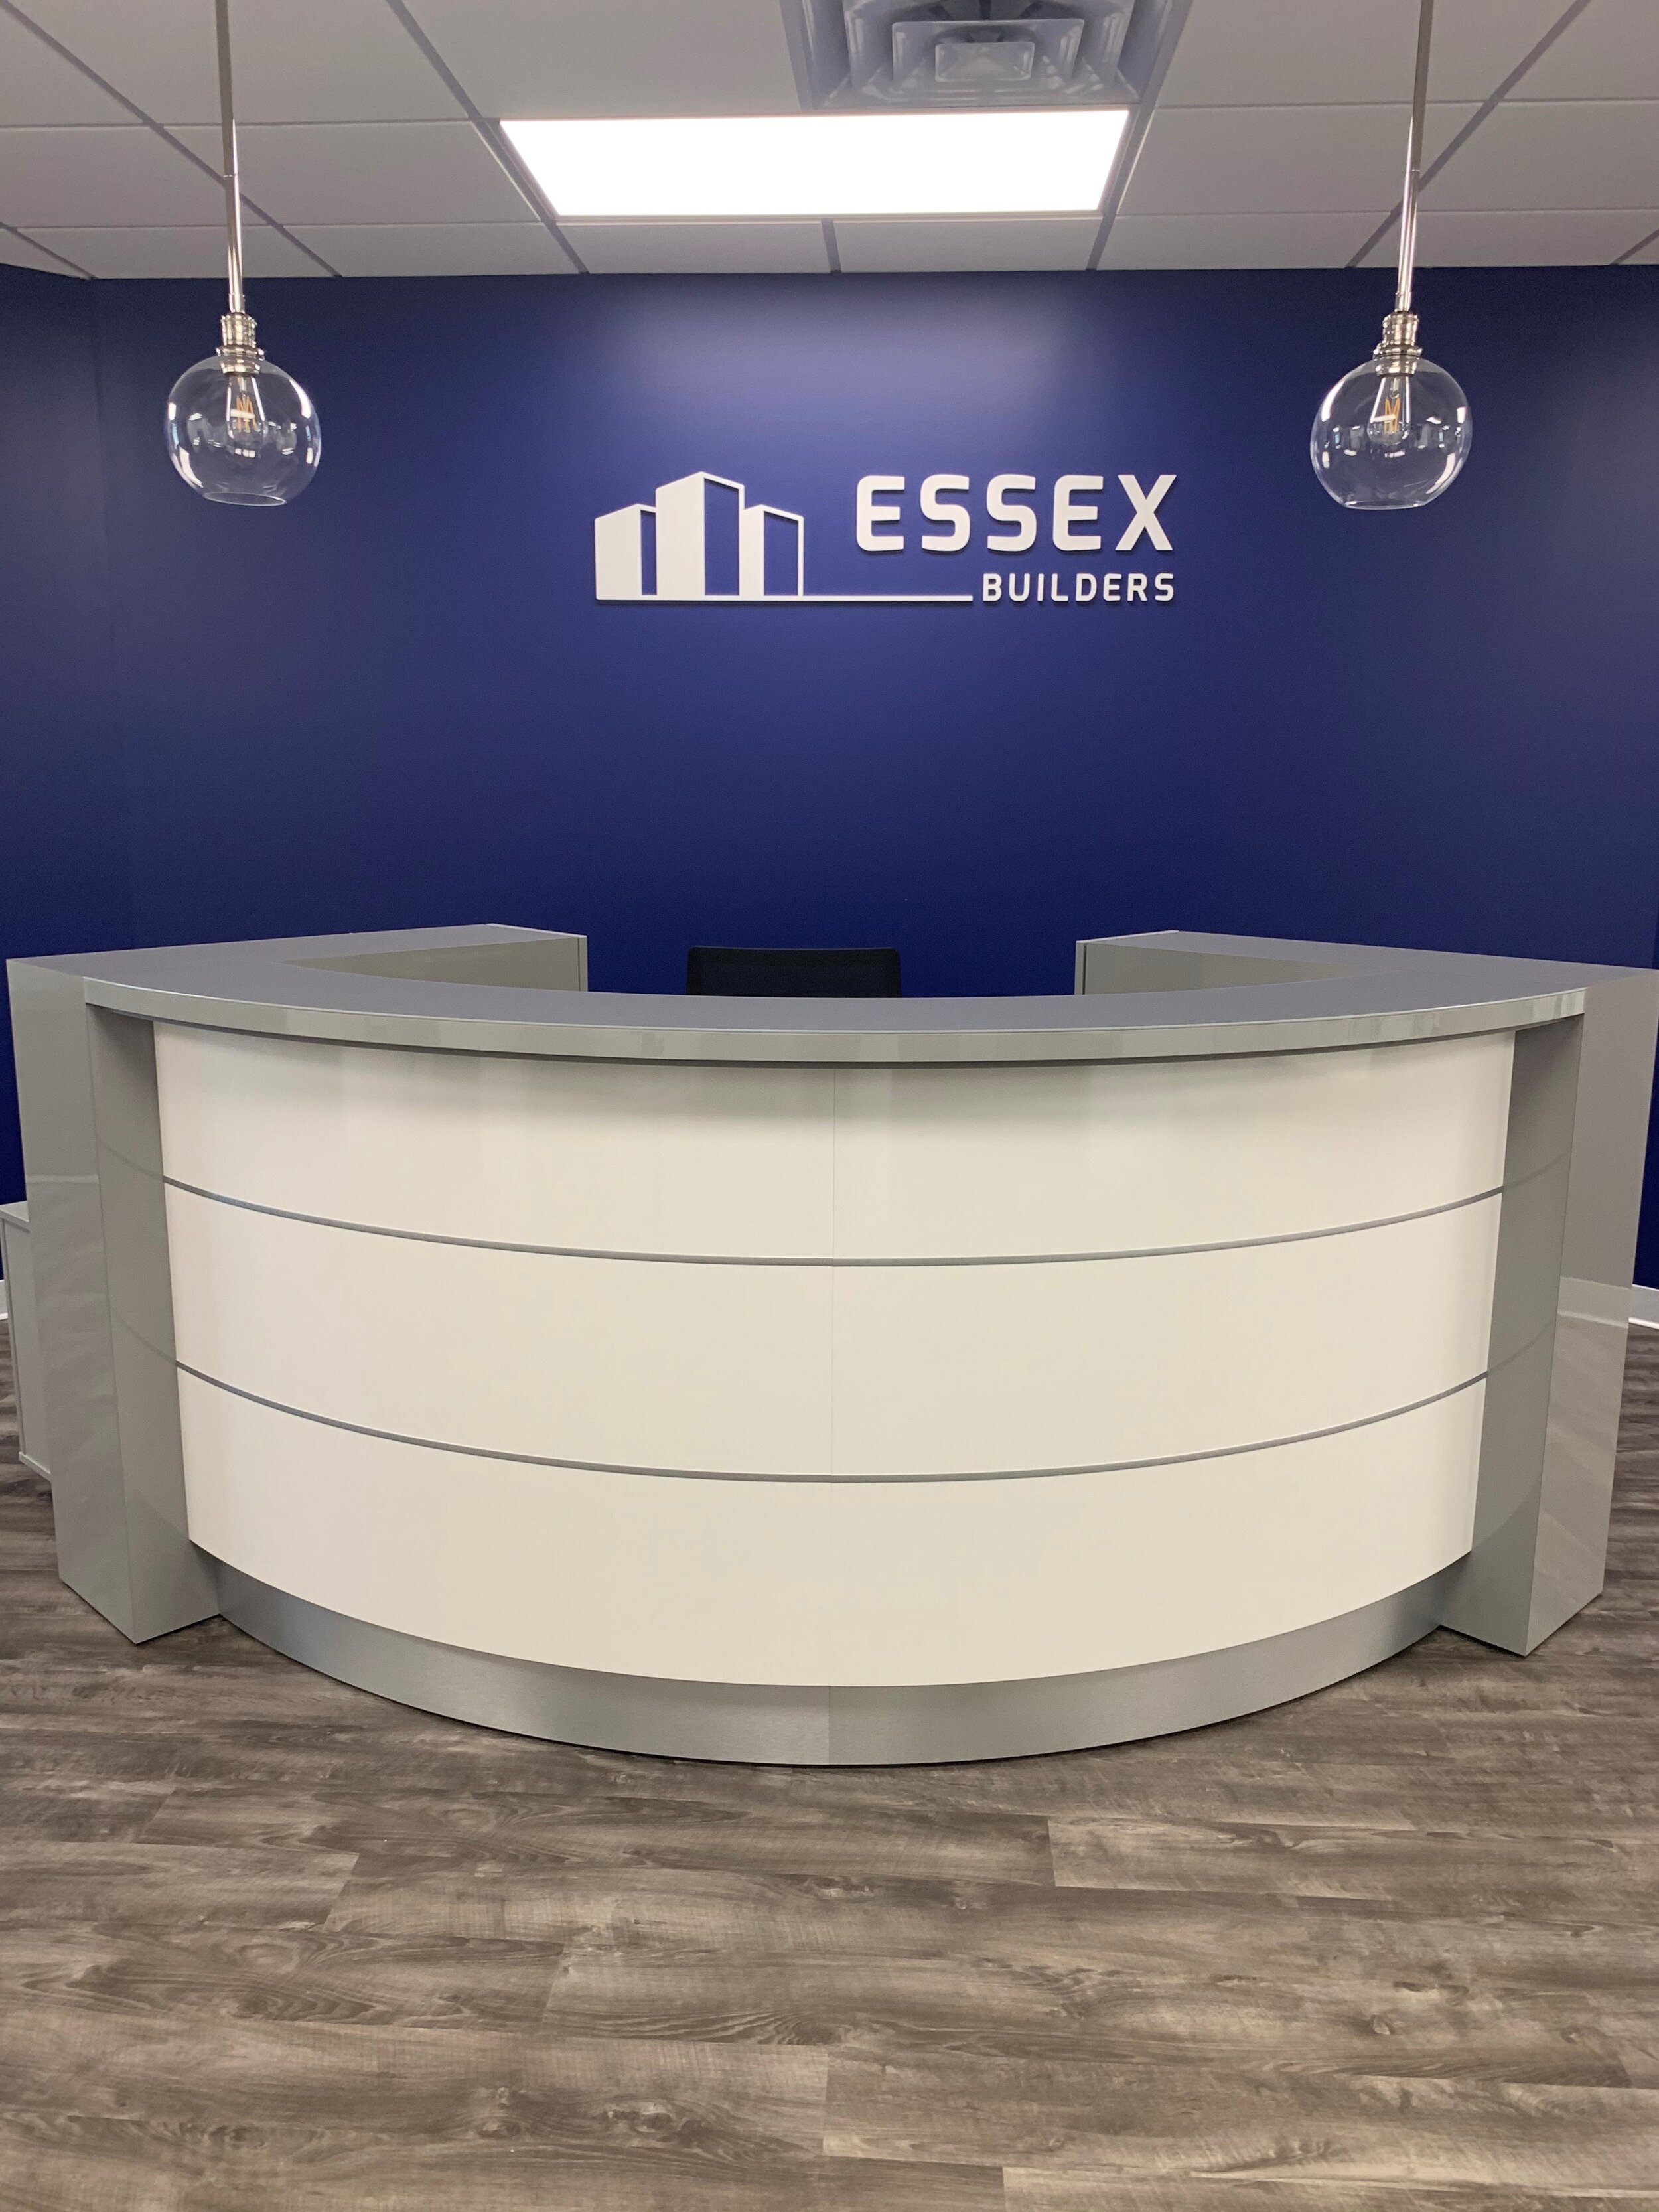 Essex Office Interior 1.jpg